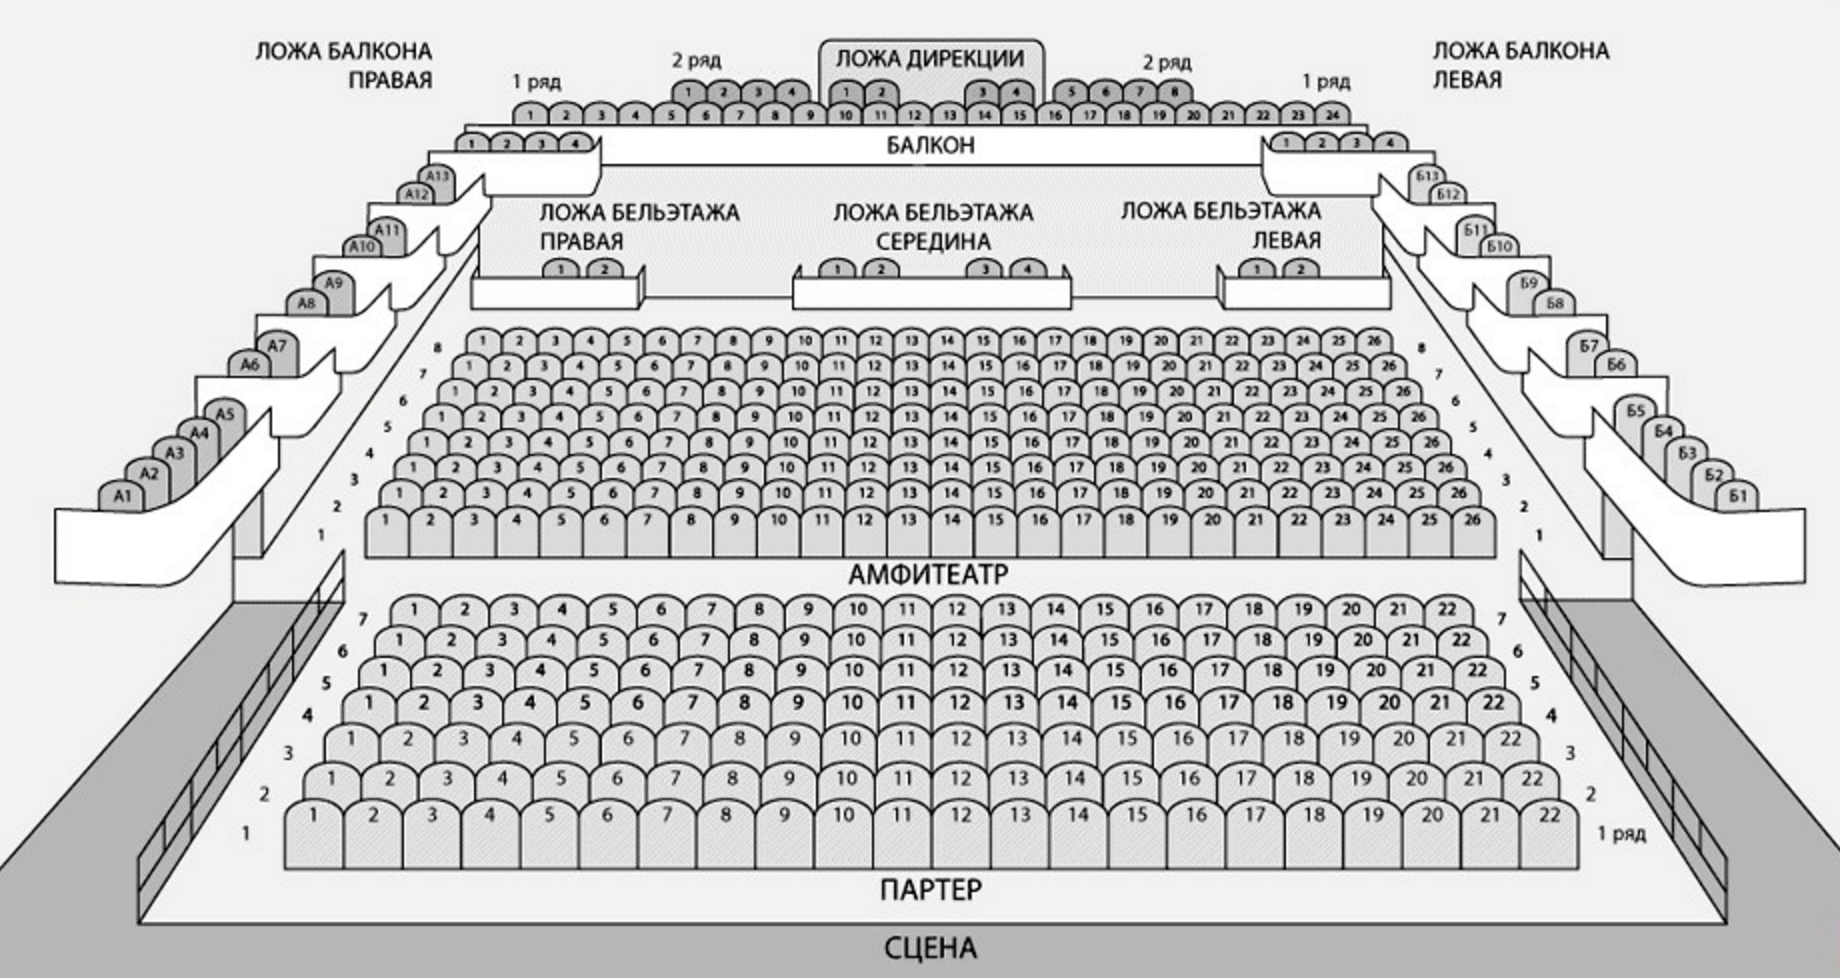 Схема зала кинотеатра